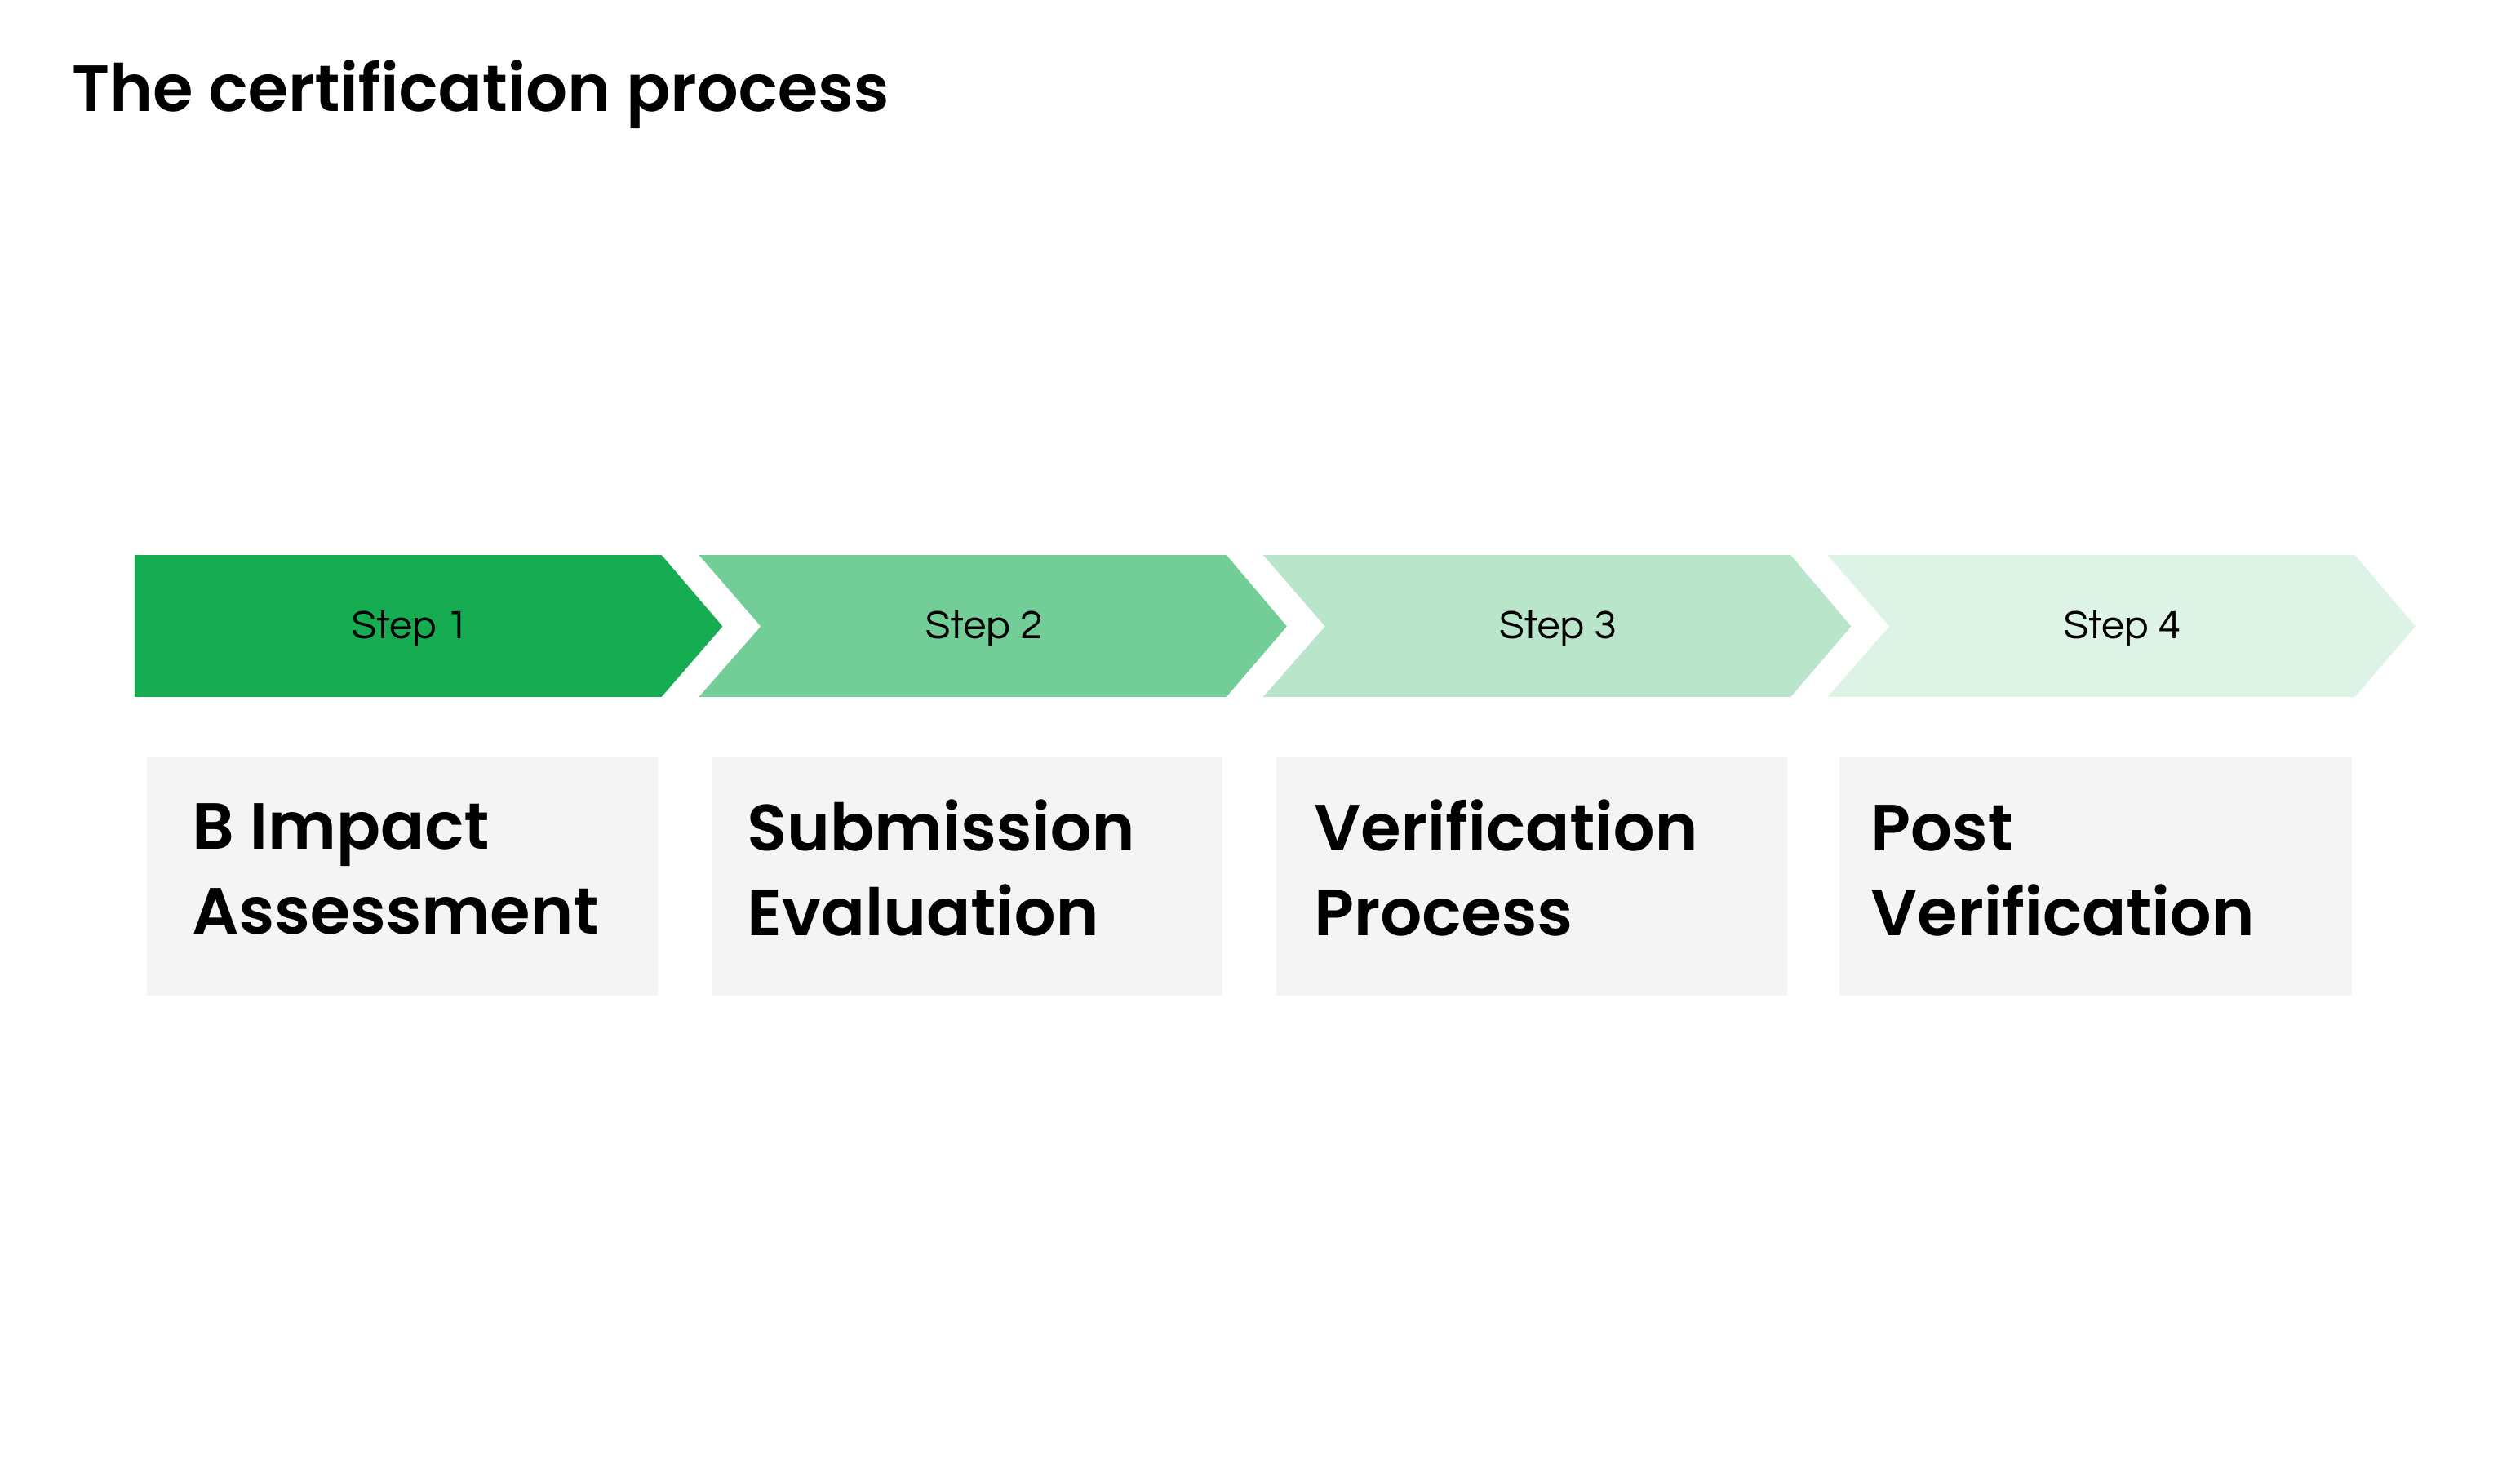 Figure 1. The certification process